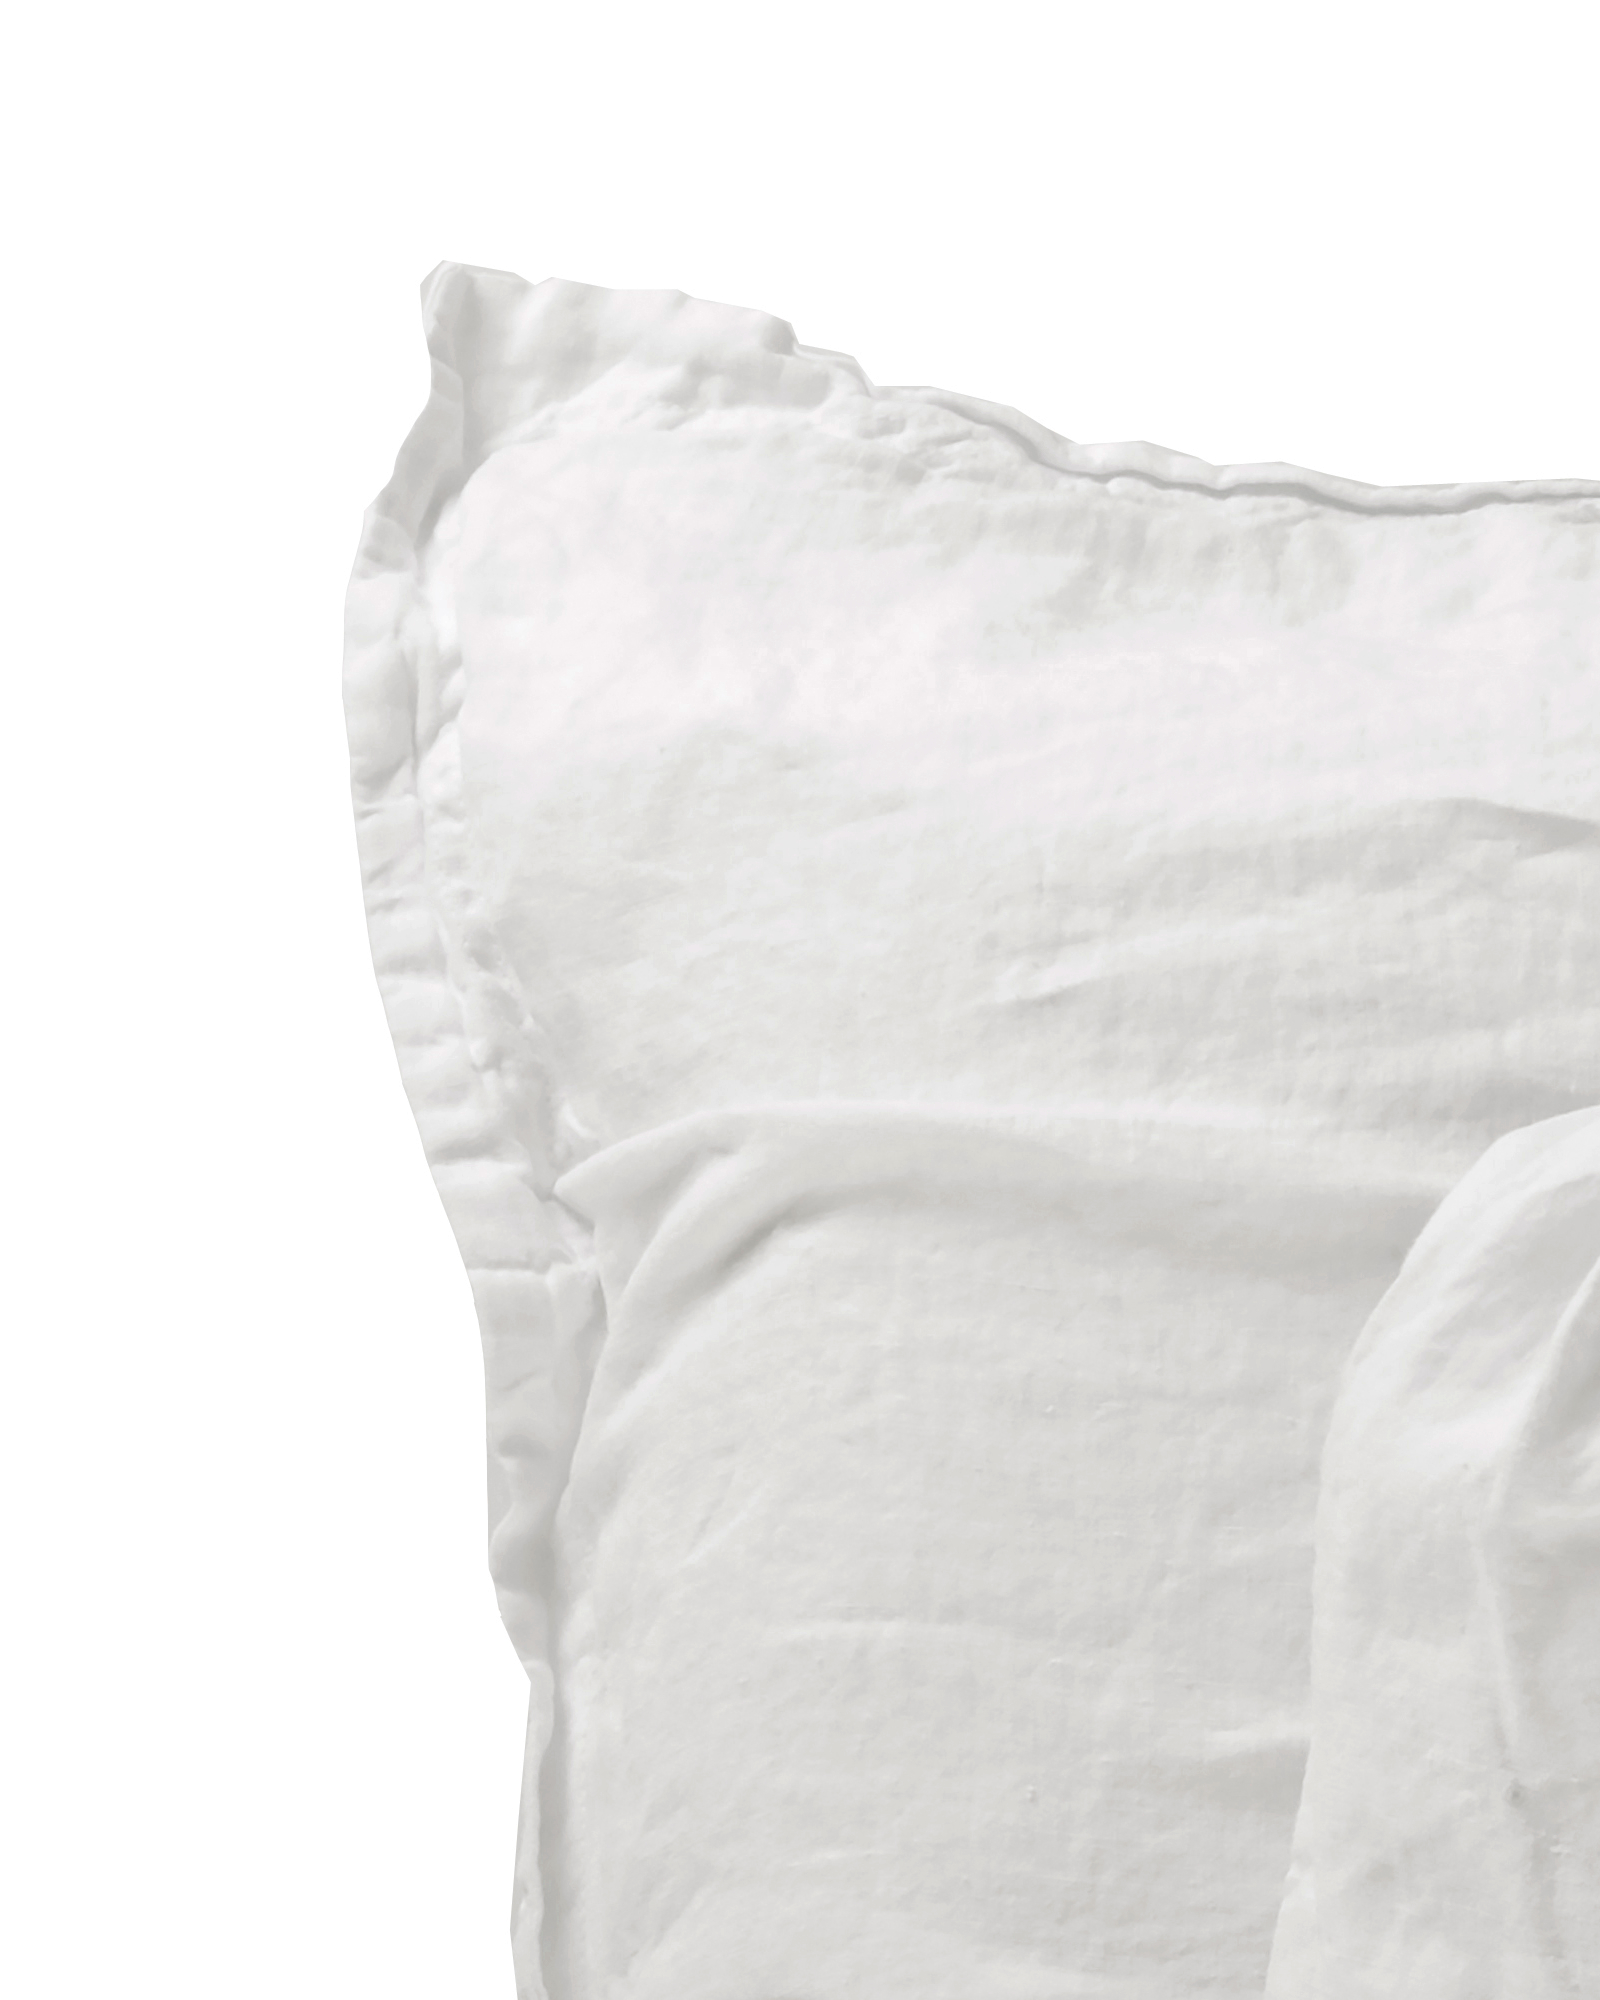 MARIE-MARIE - Pillowcase LINEN STORIES Clay - 65x65 cm - Clay